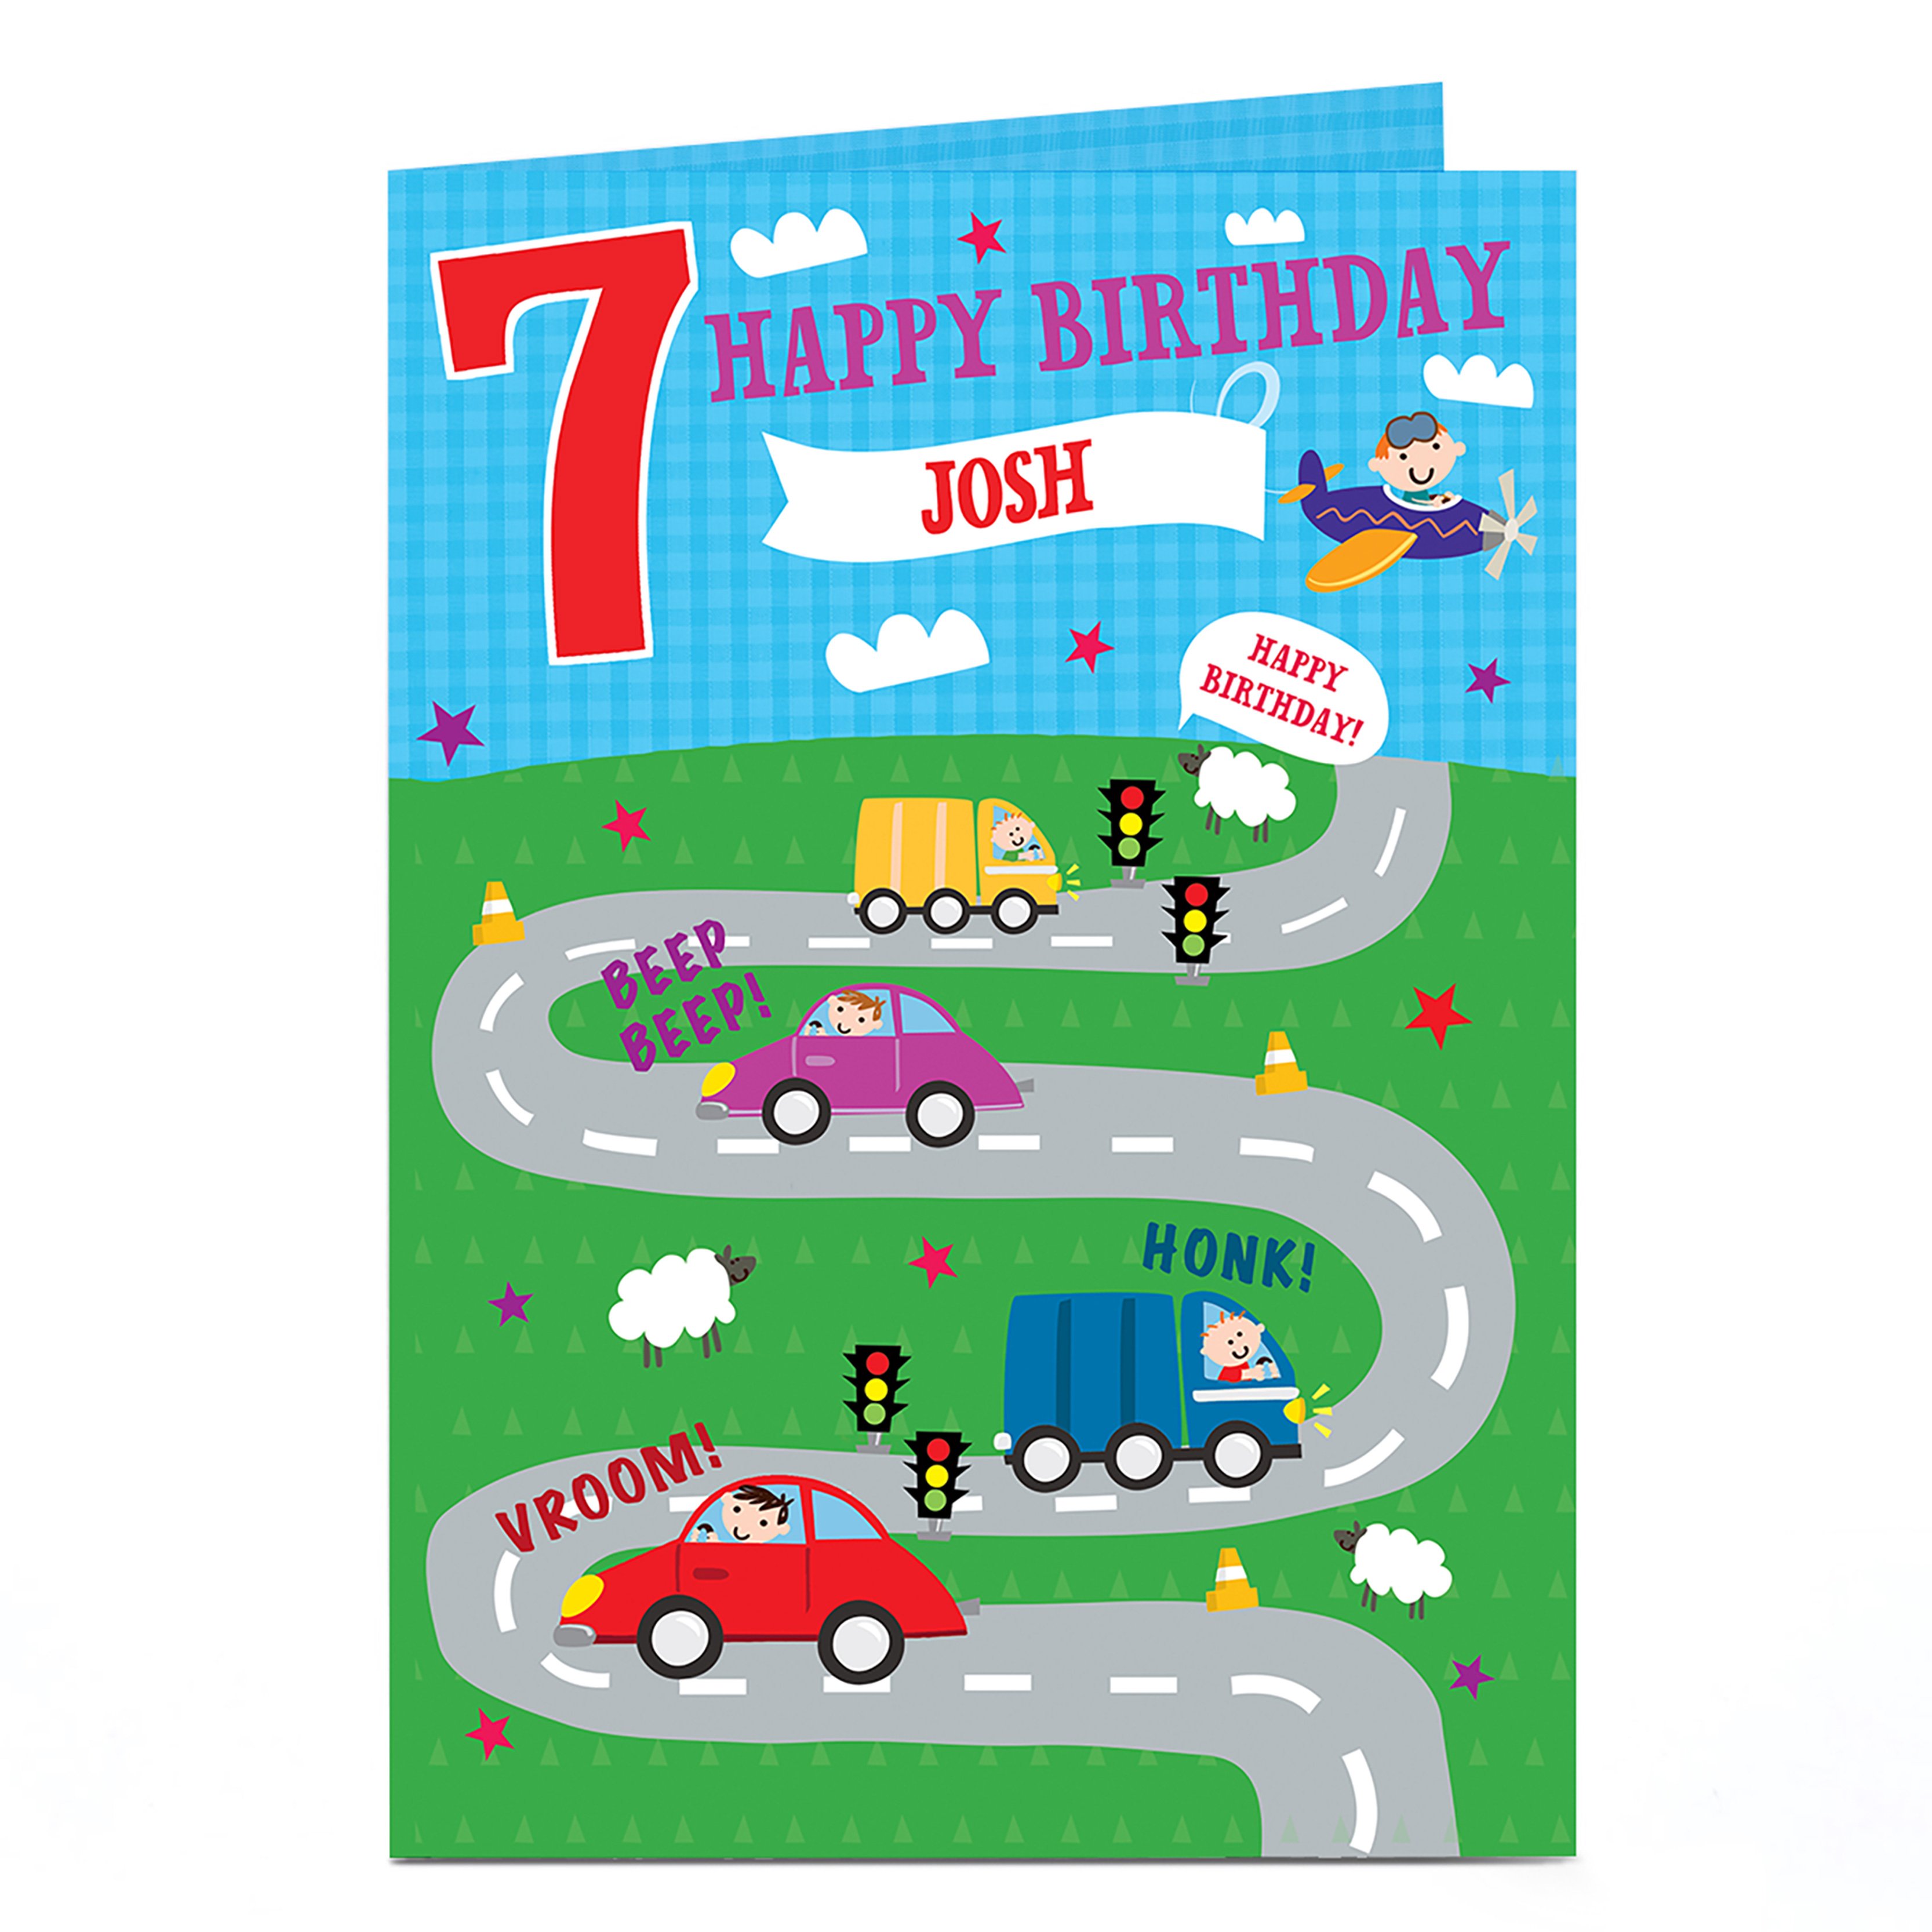 Personalised Editable Age Birthday Card - Cartoon Cars